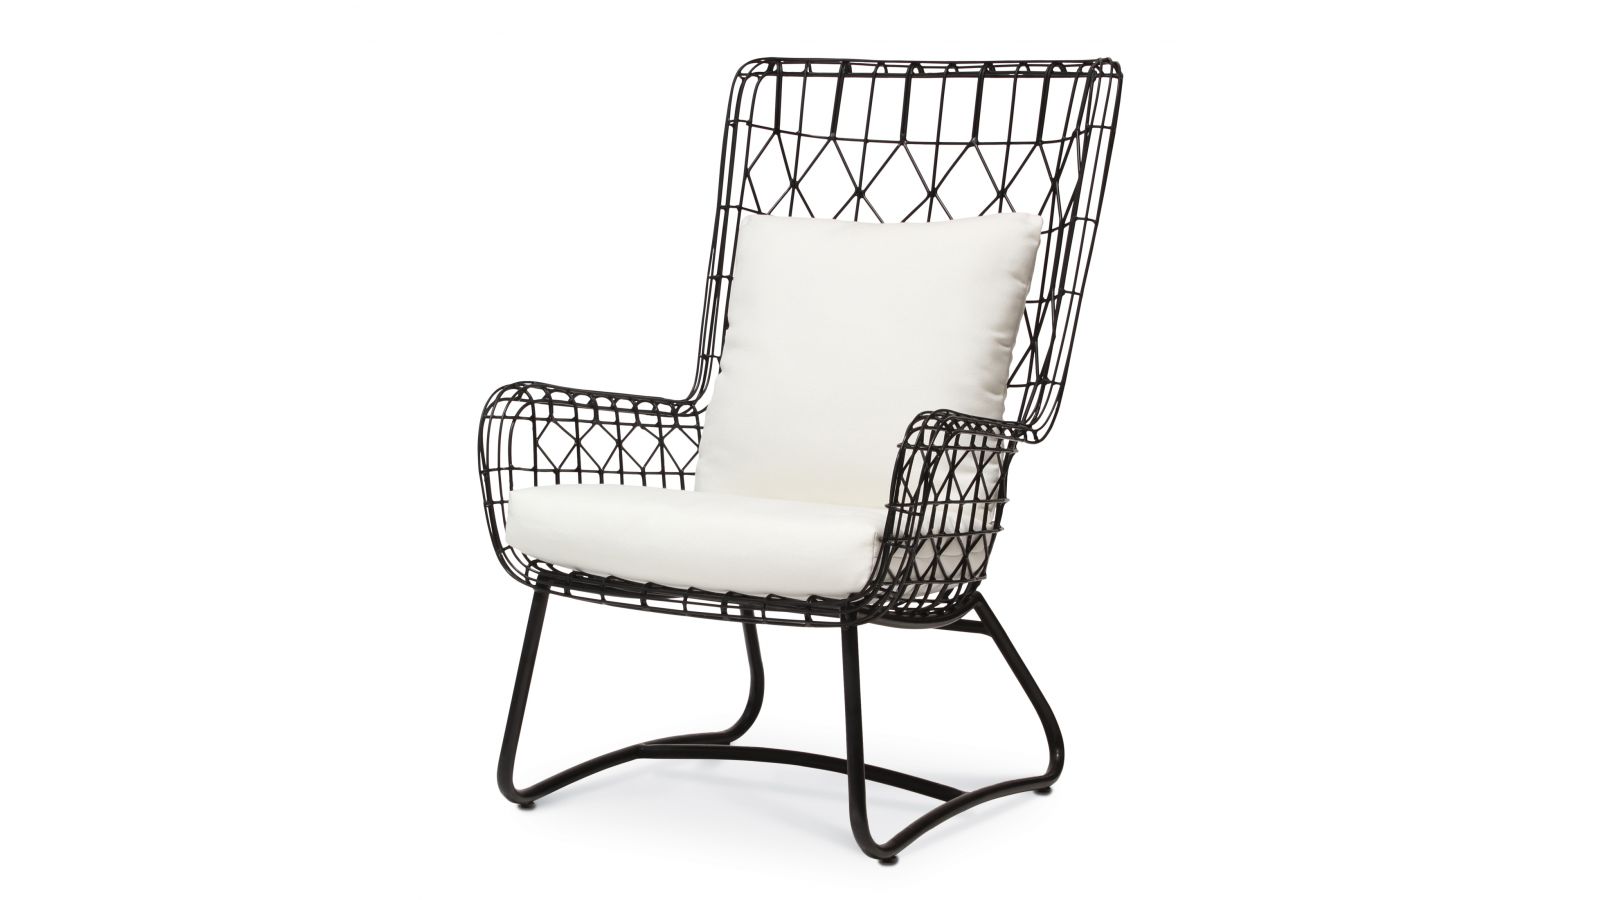 Capri Outdoor Wing Chair, Black